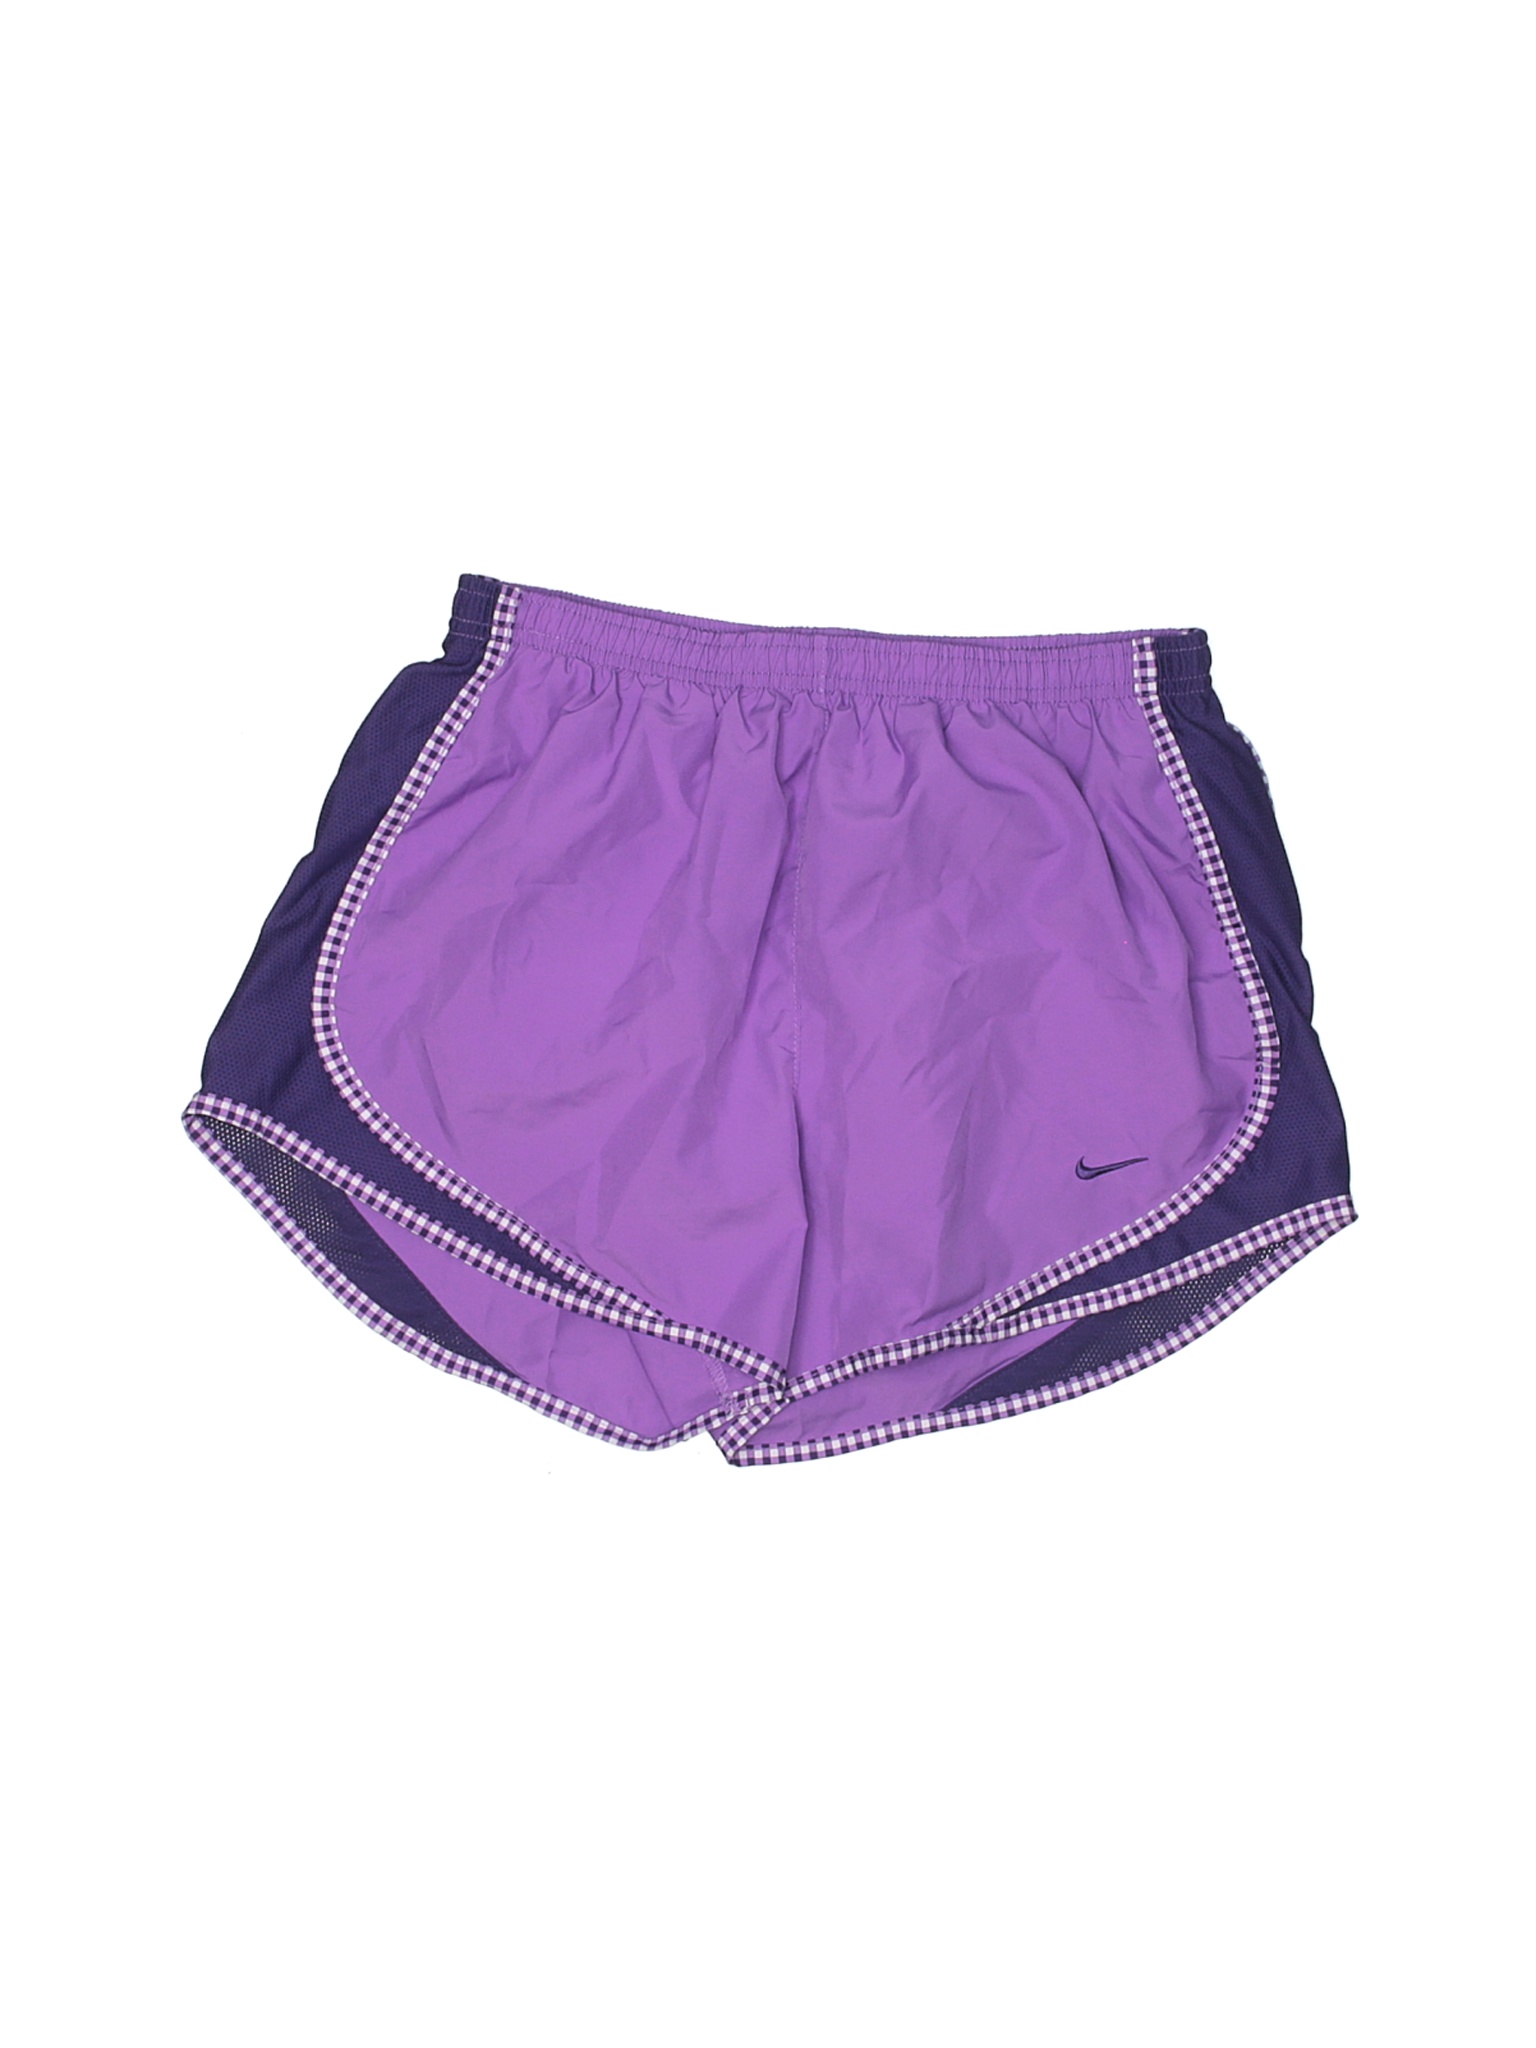 Nike Women Purple Athletic Shorts S | eBay